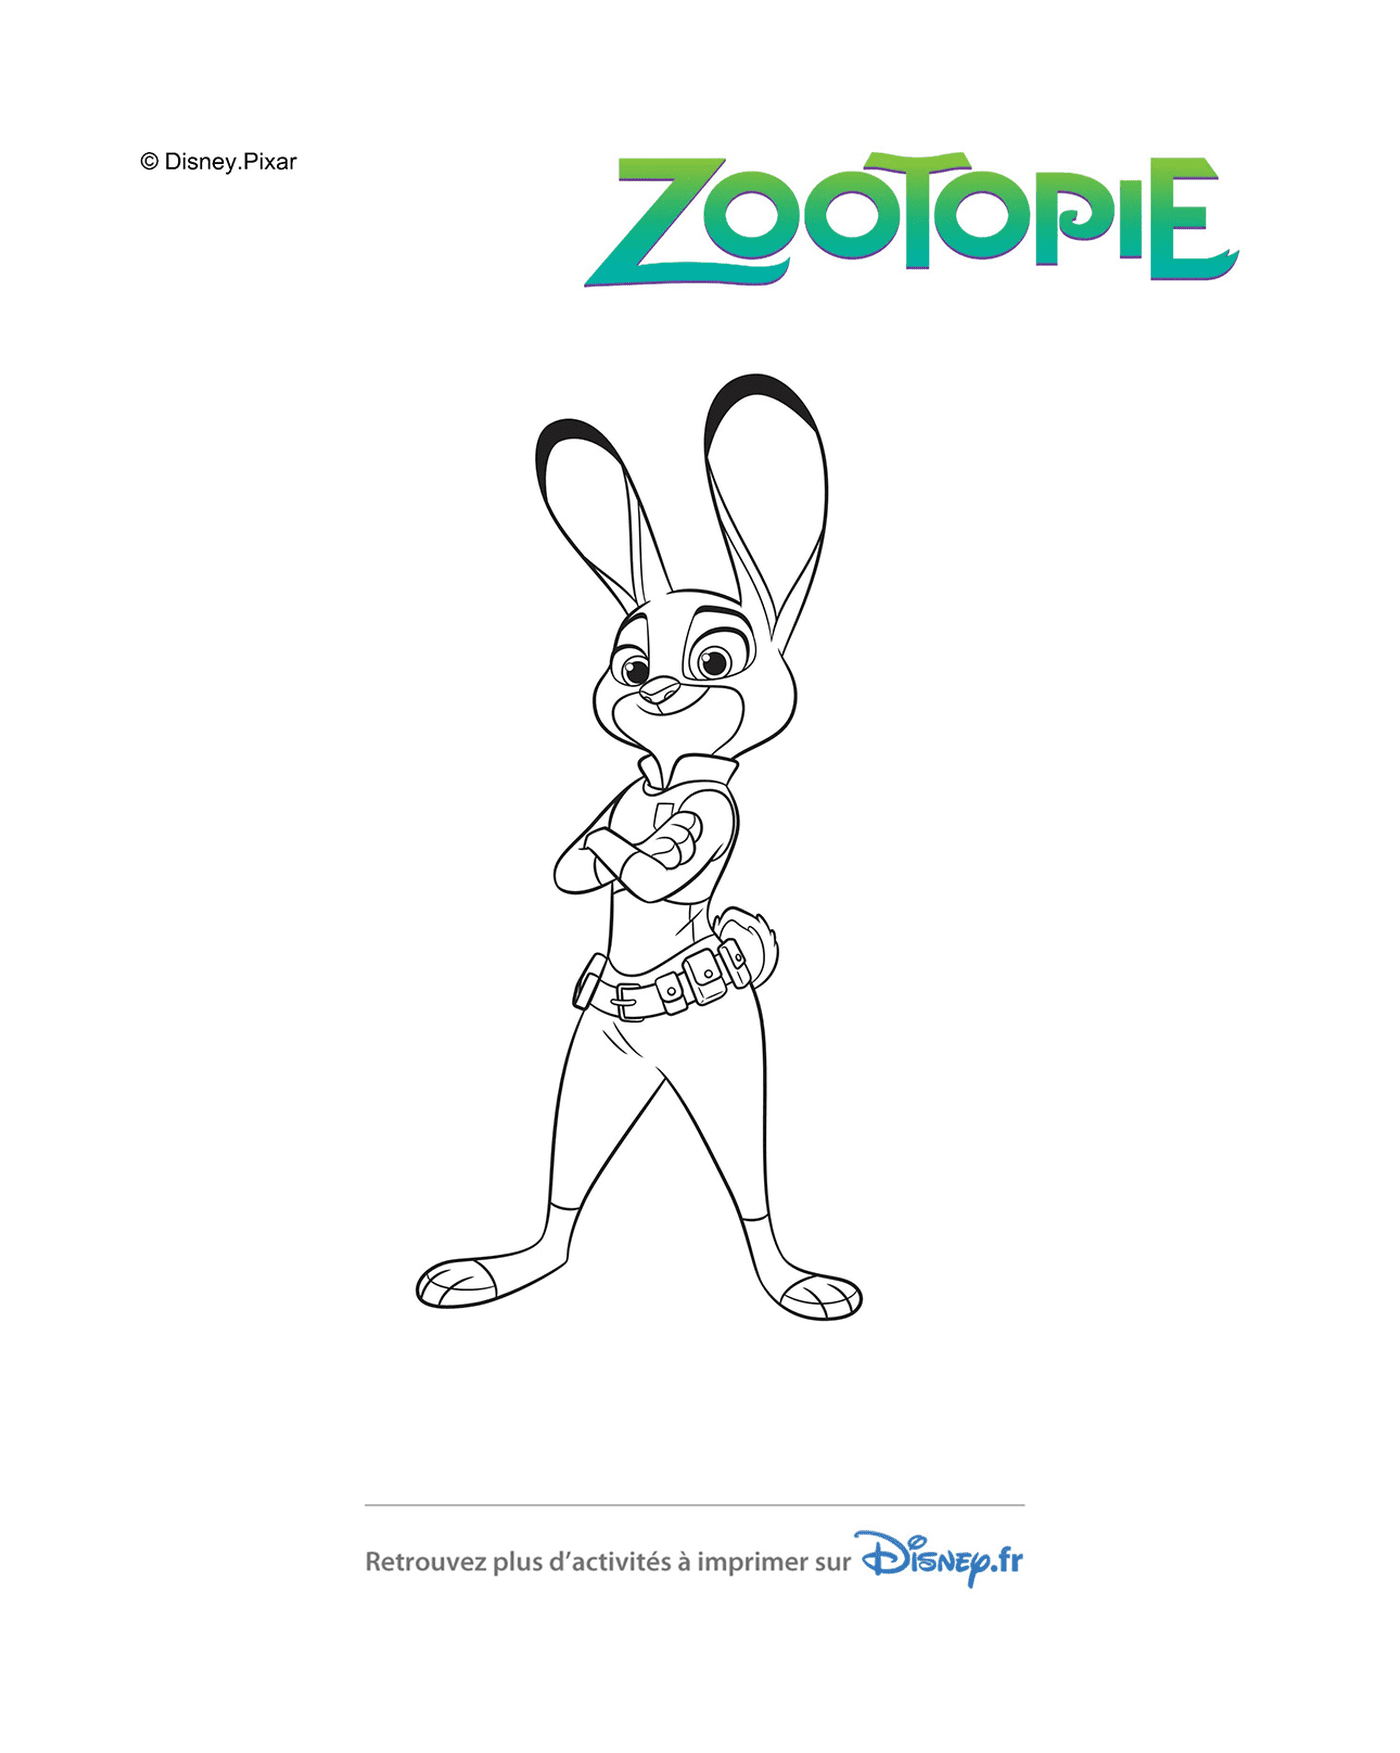  Judy Hopps, a polícia intrépida da Disney Zootopie 